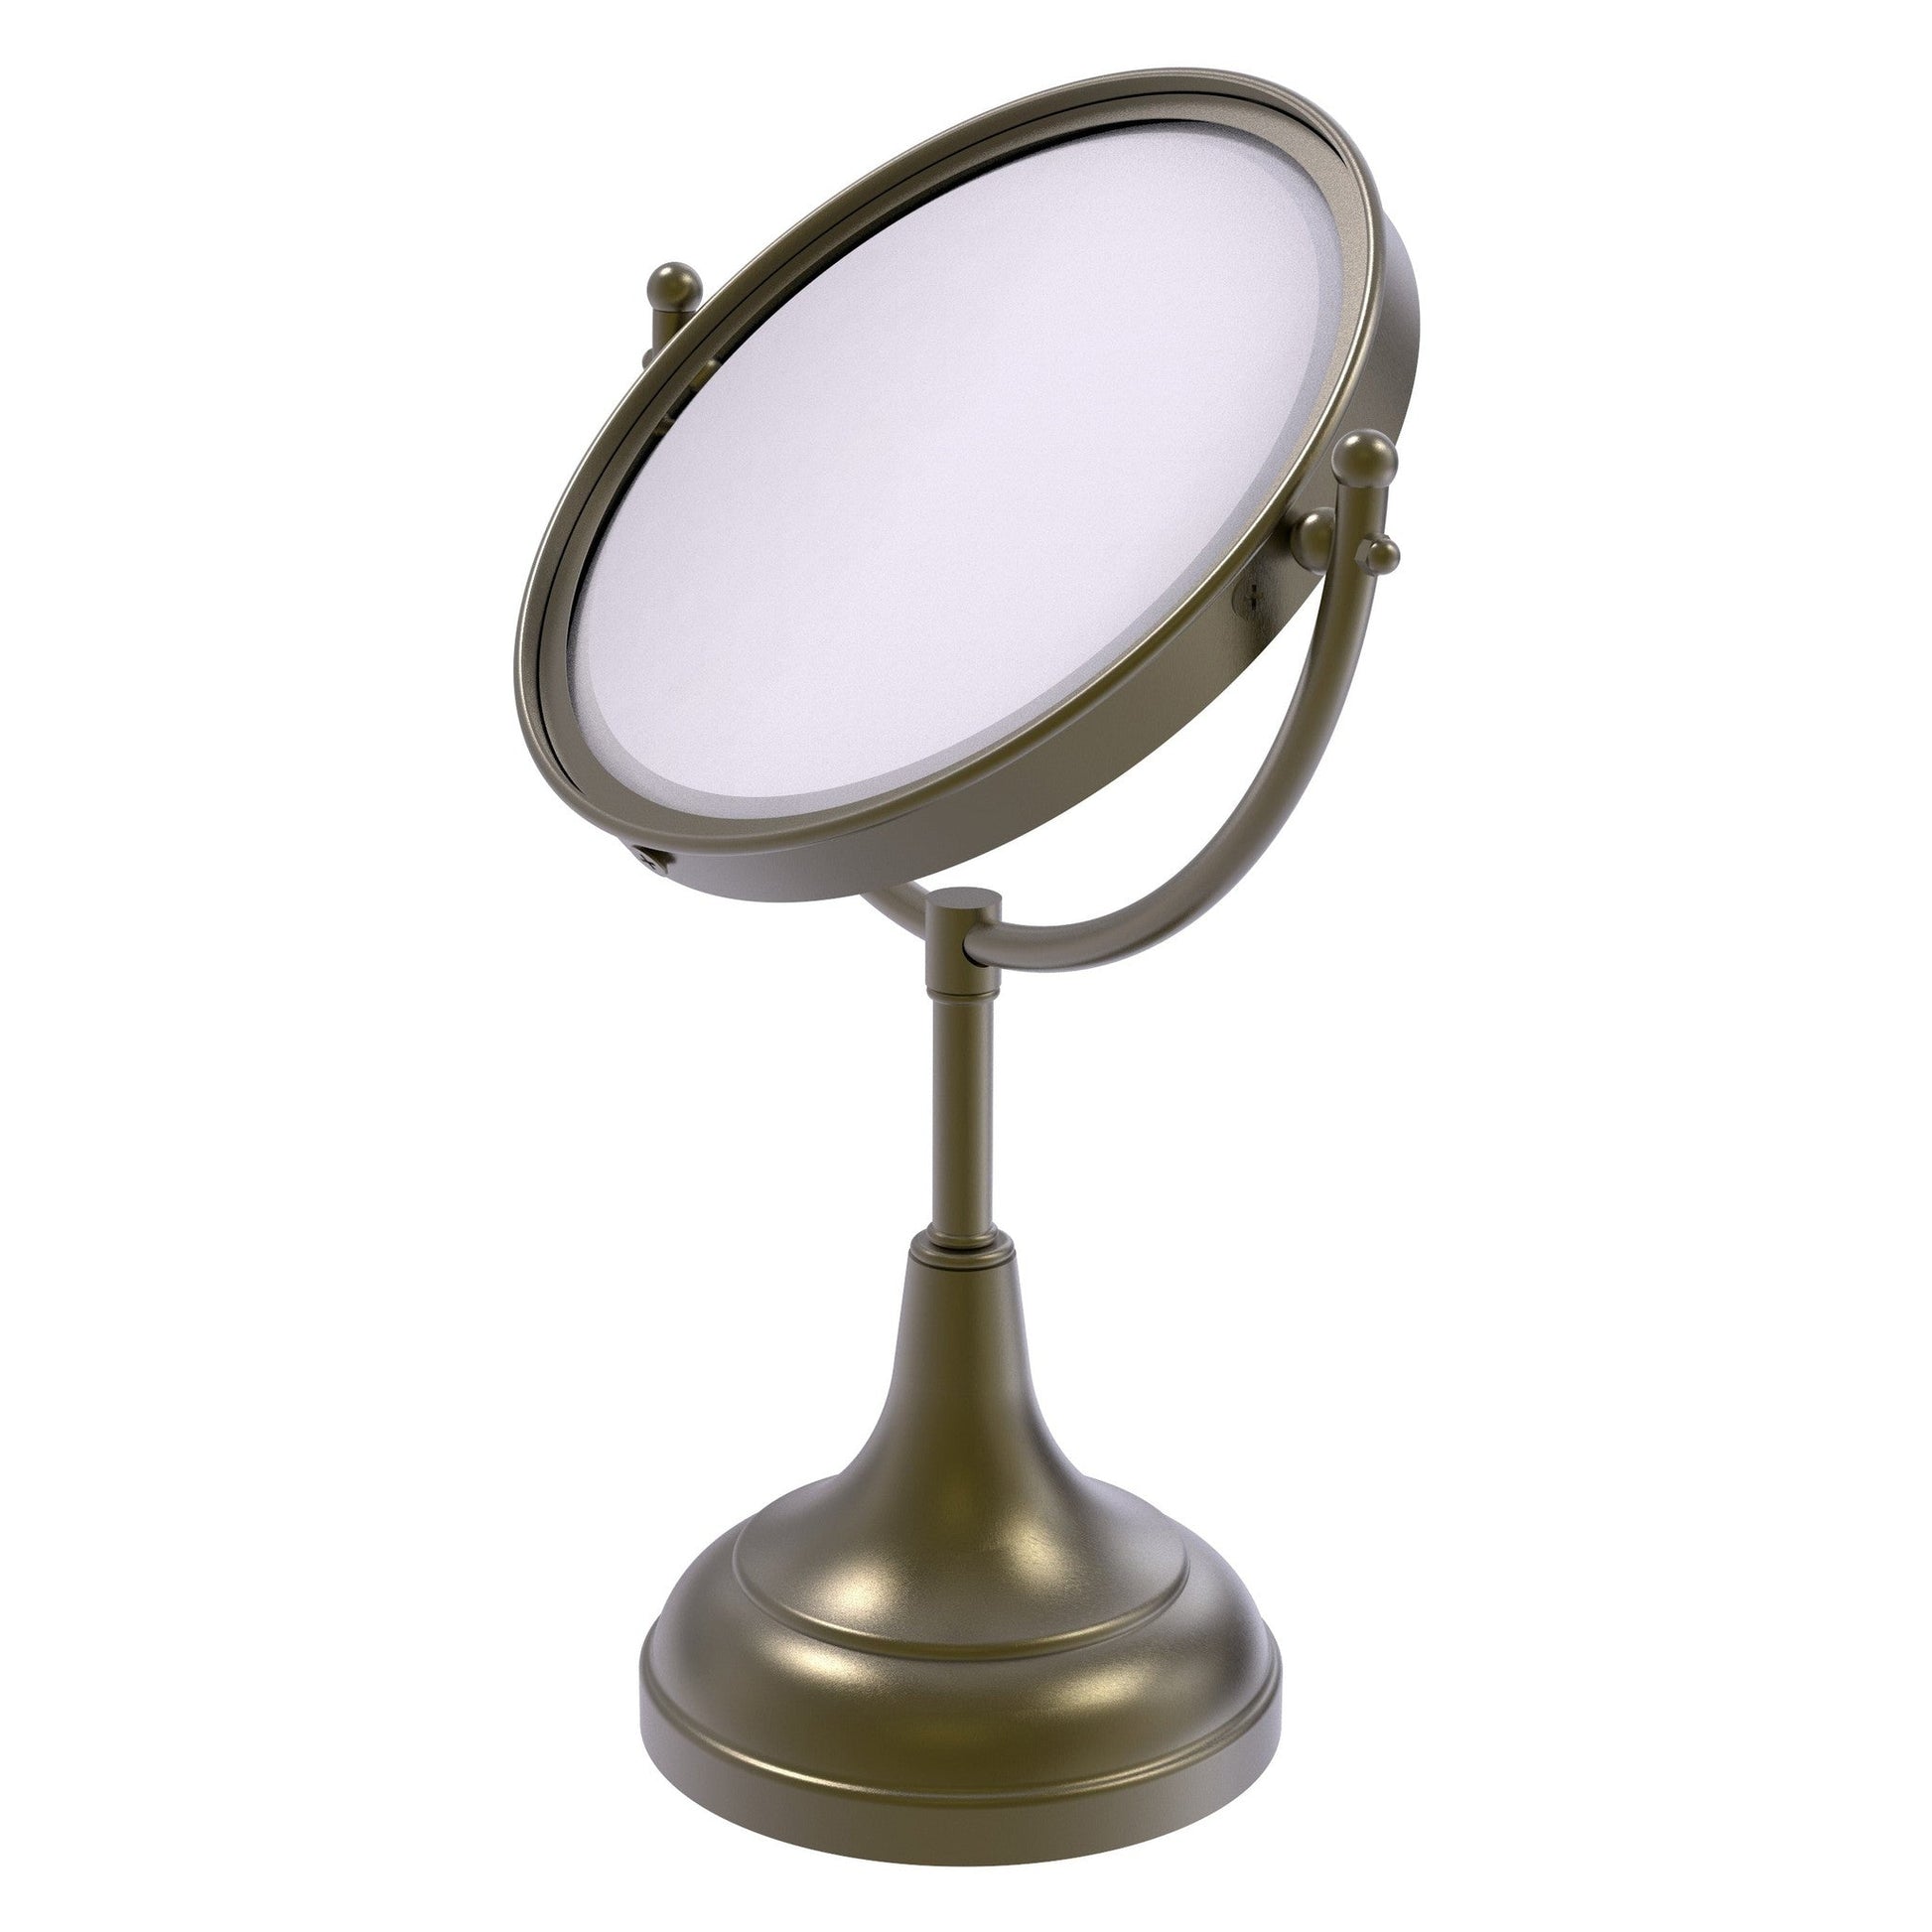 Allied Brass DM-2/3X 8" x 8" Antique Brass Solid Brass Vanity Top Make-Up Mirror 3X Magnification